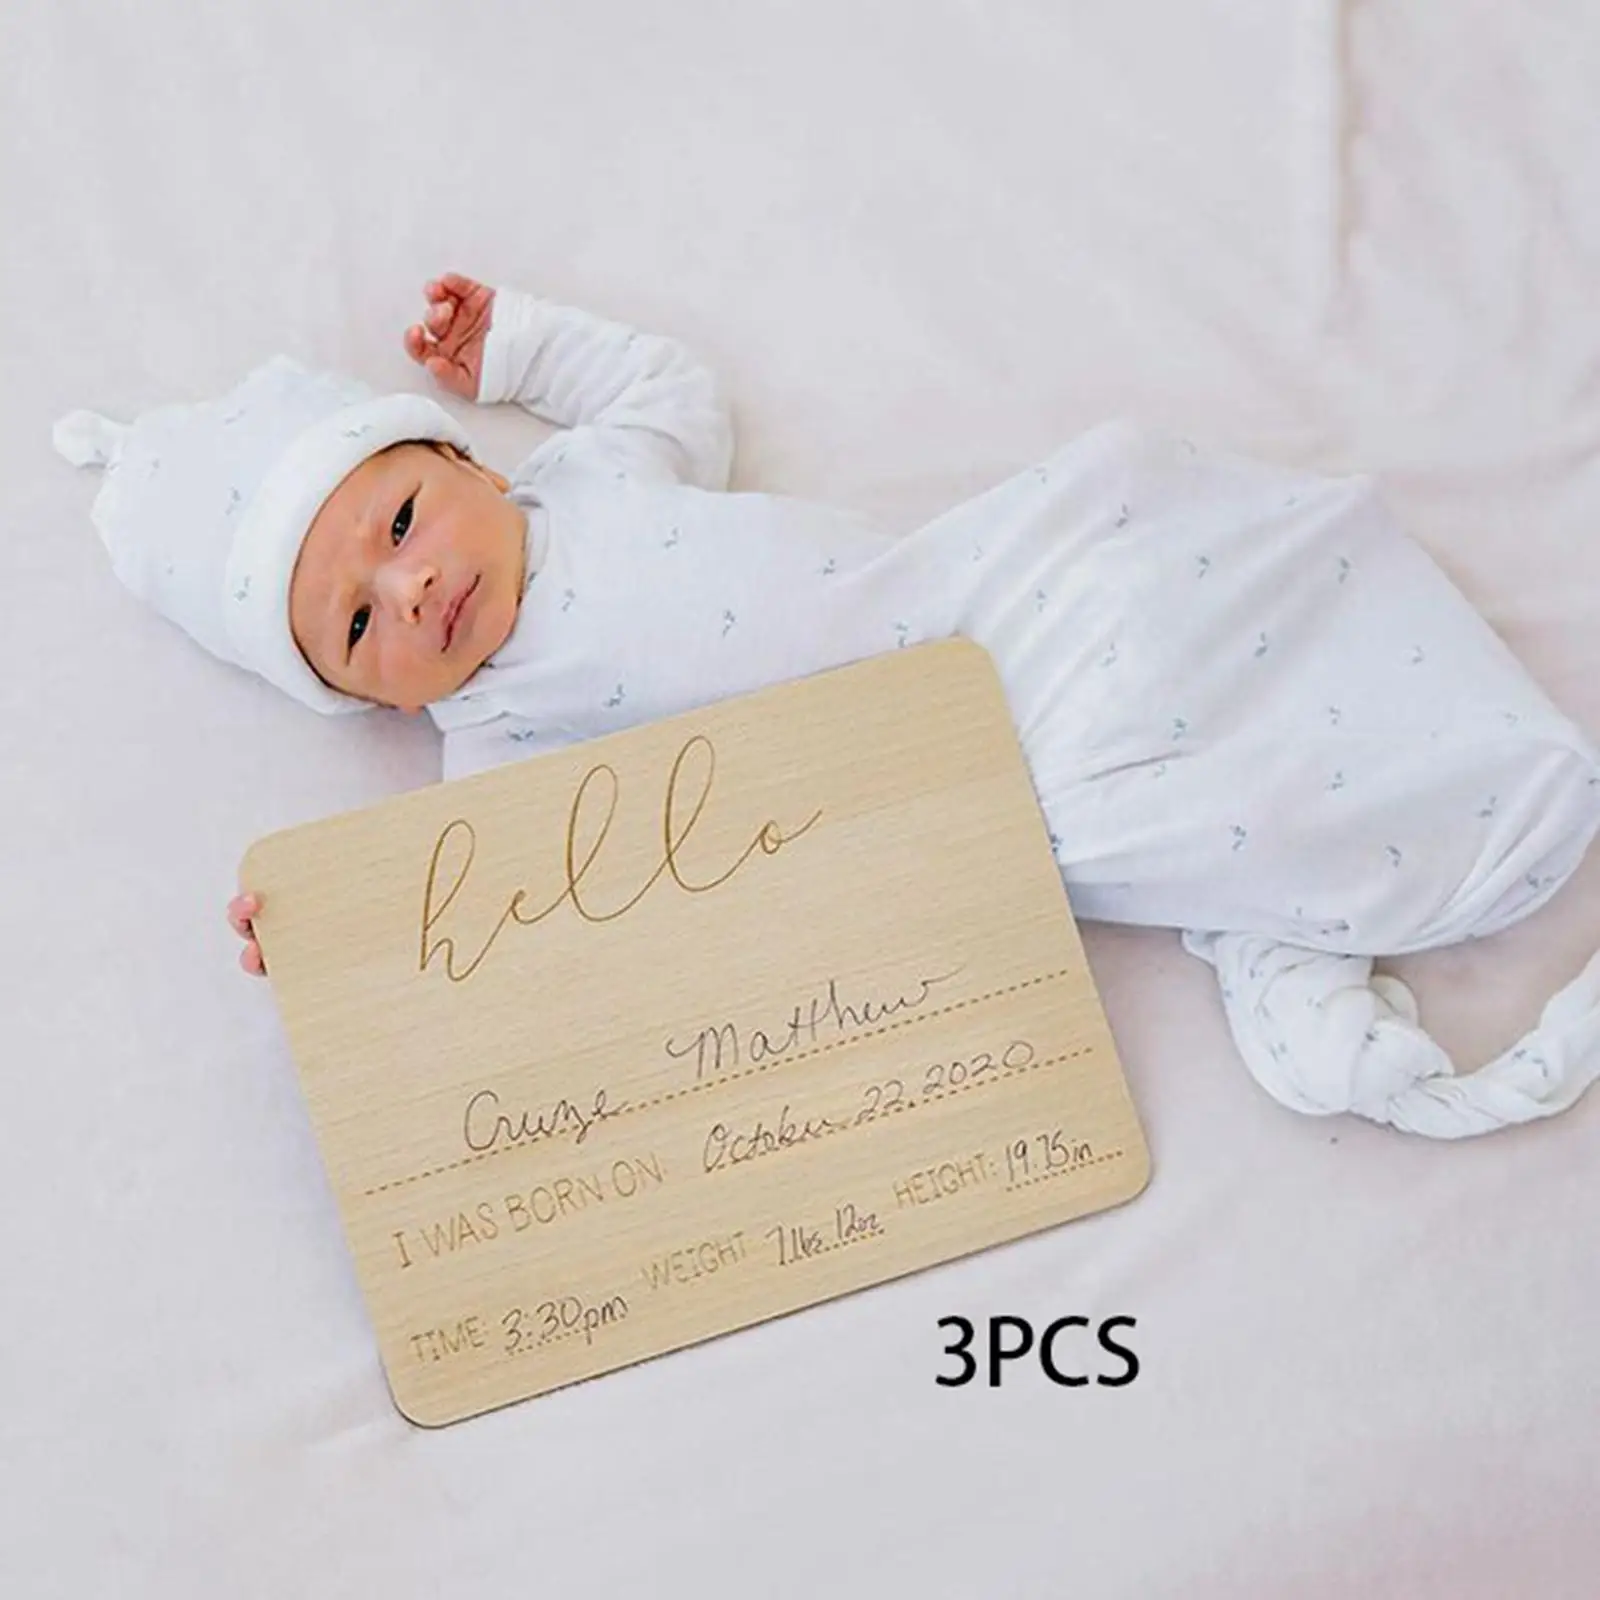 3 Pieces Baby Milestone Cards Shower Gift Newborn Commemorative Registry